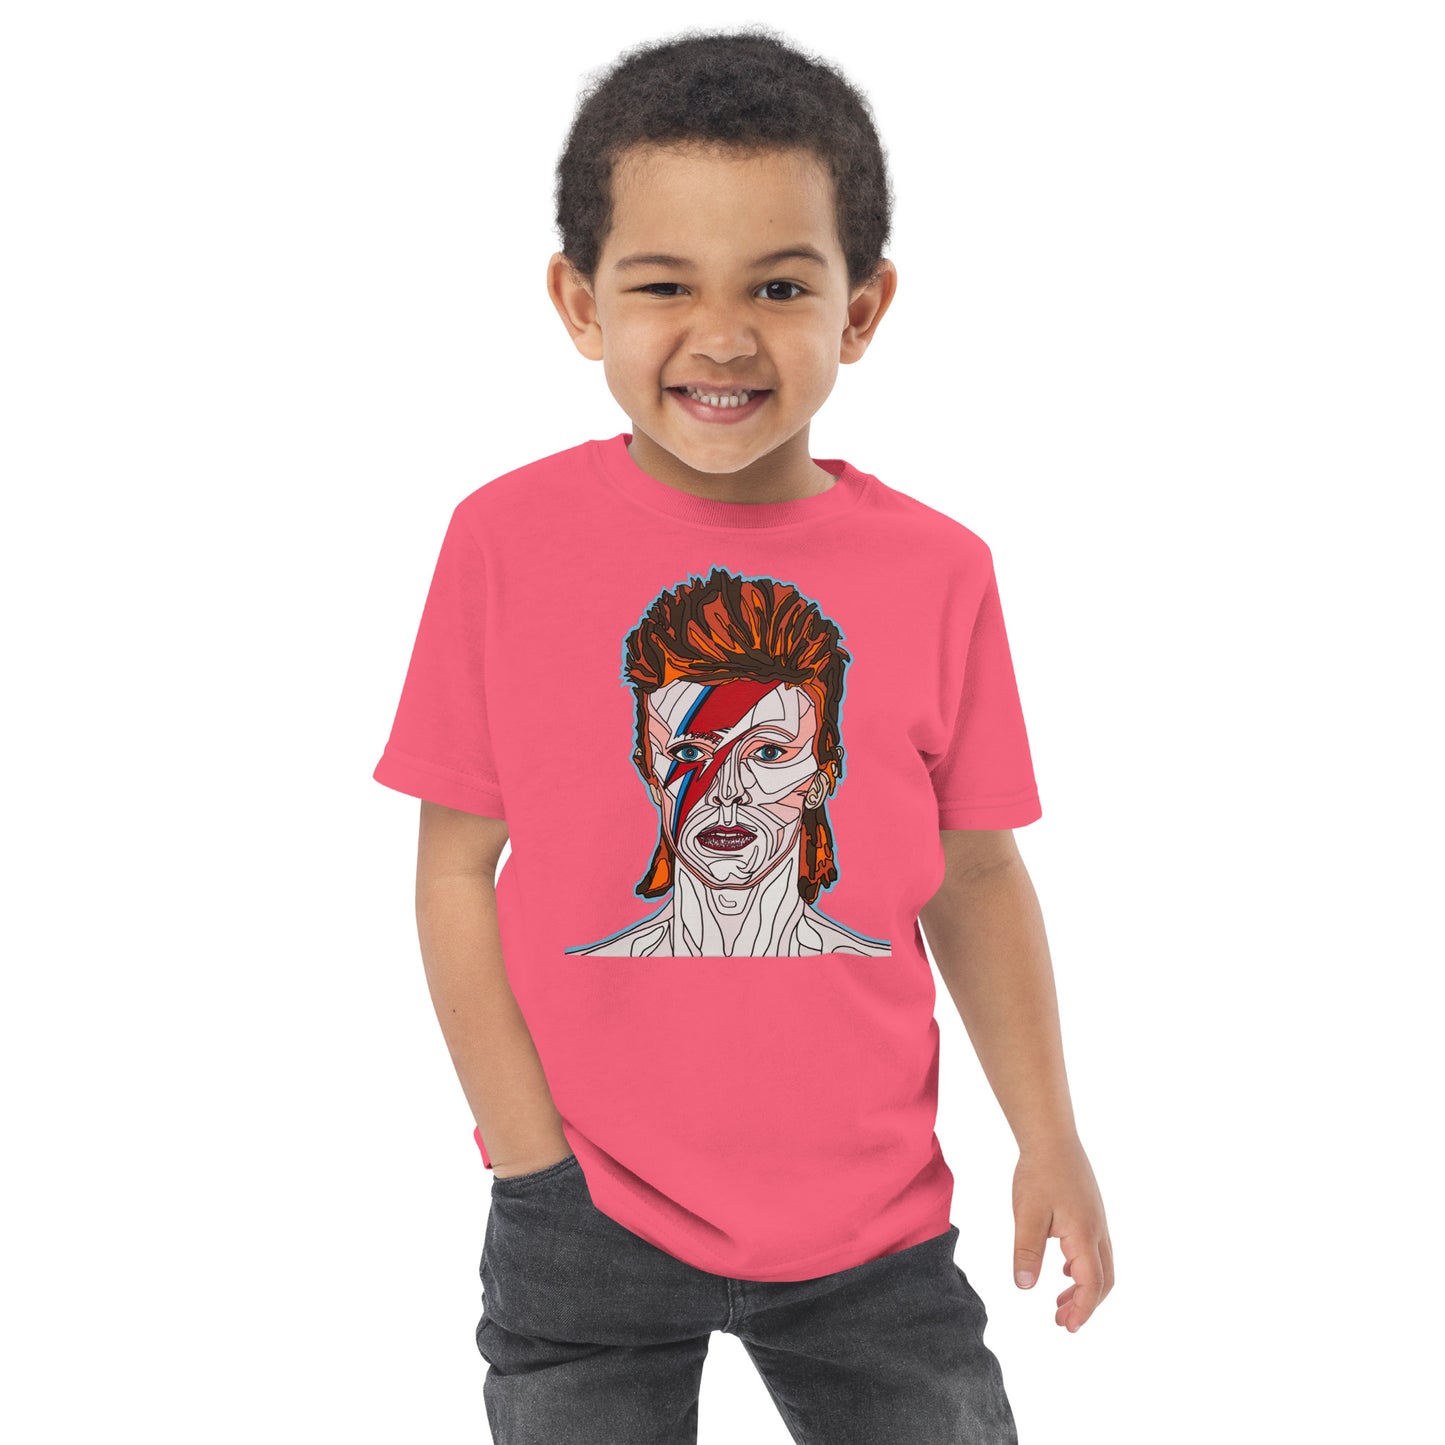 Starman - Toddler jersey t-shirt